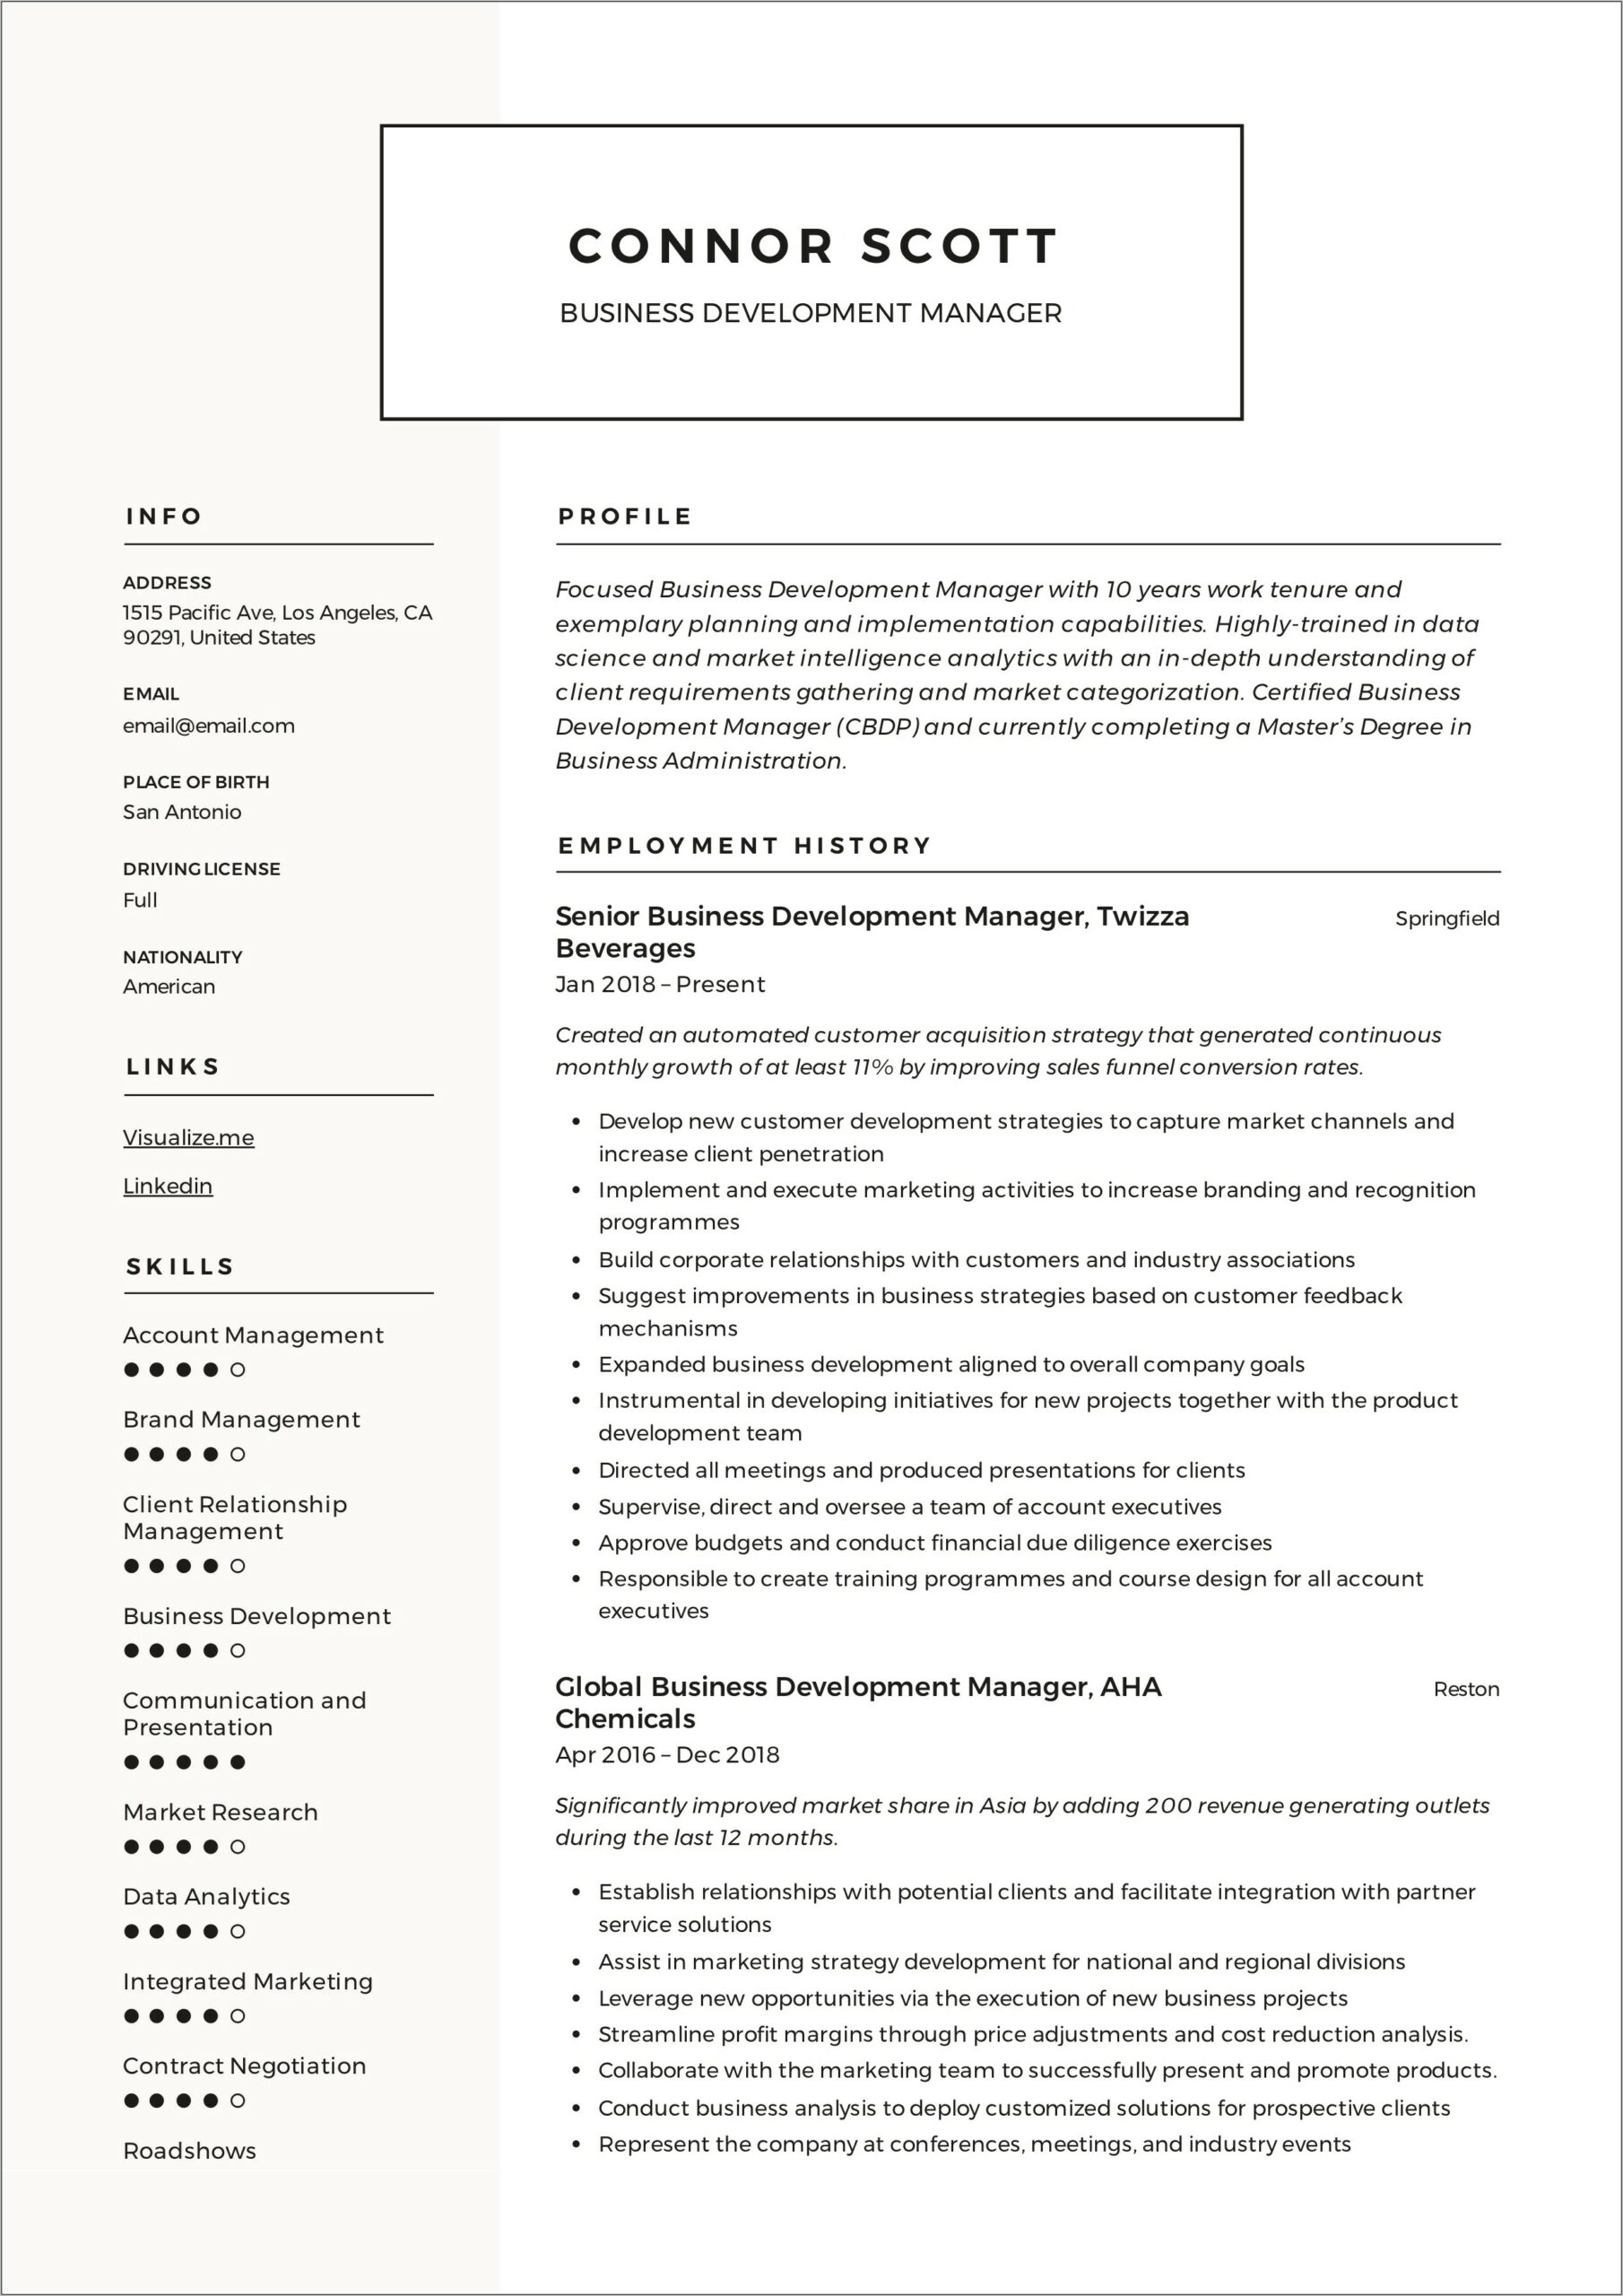 Business Relationship Manager Resume Format